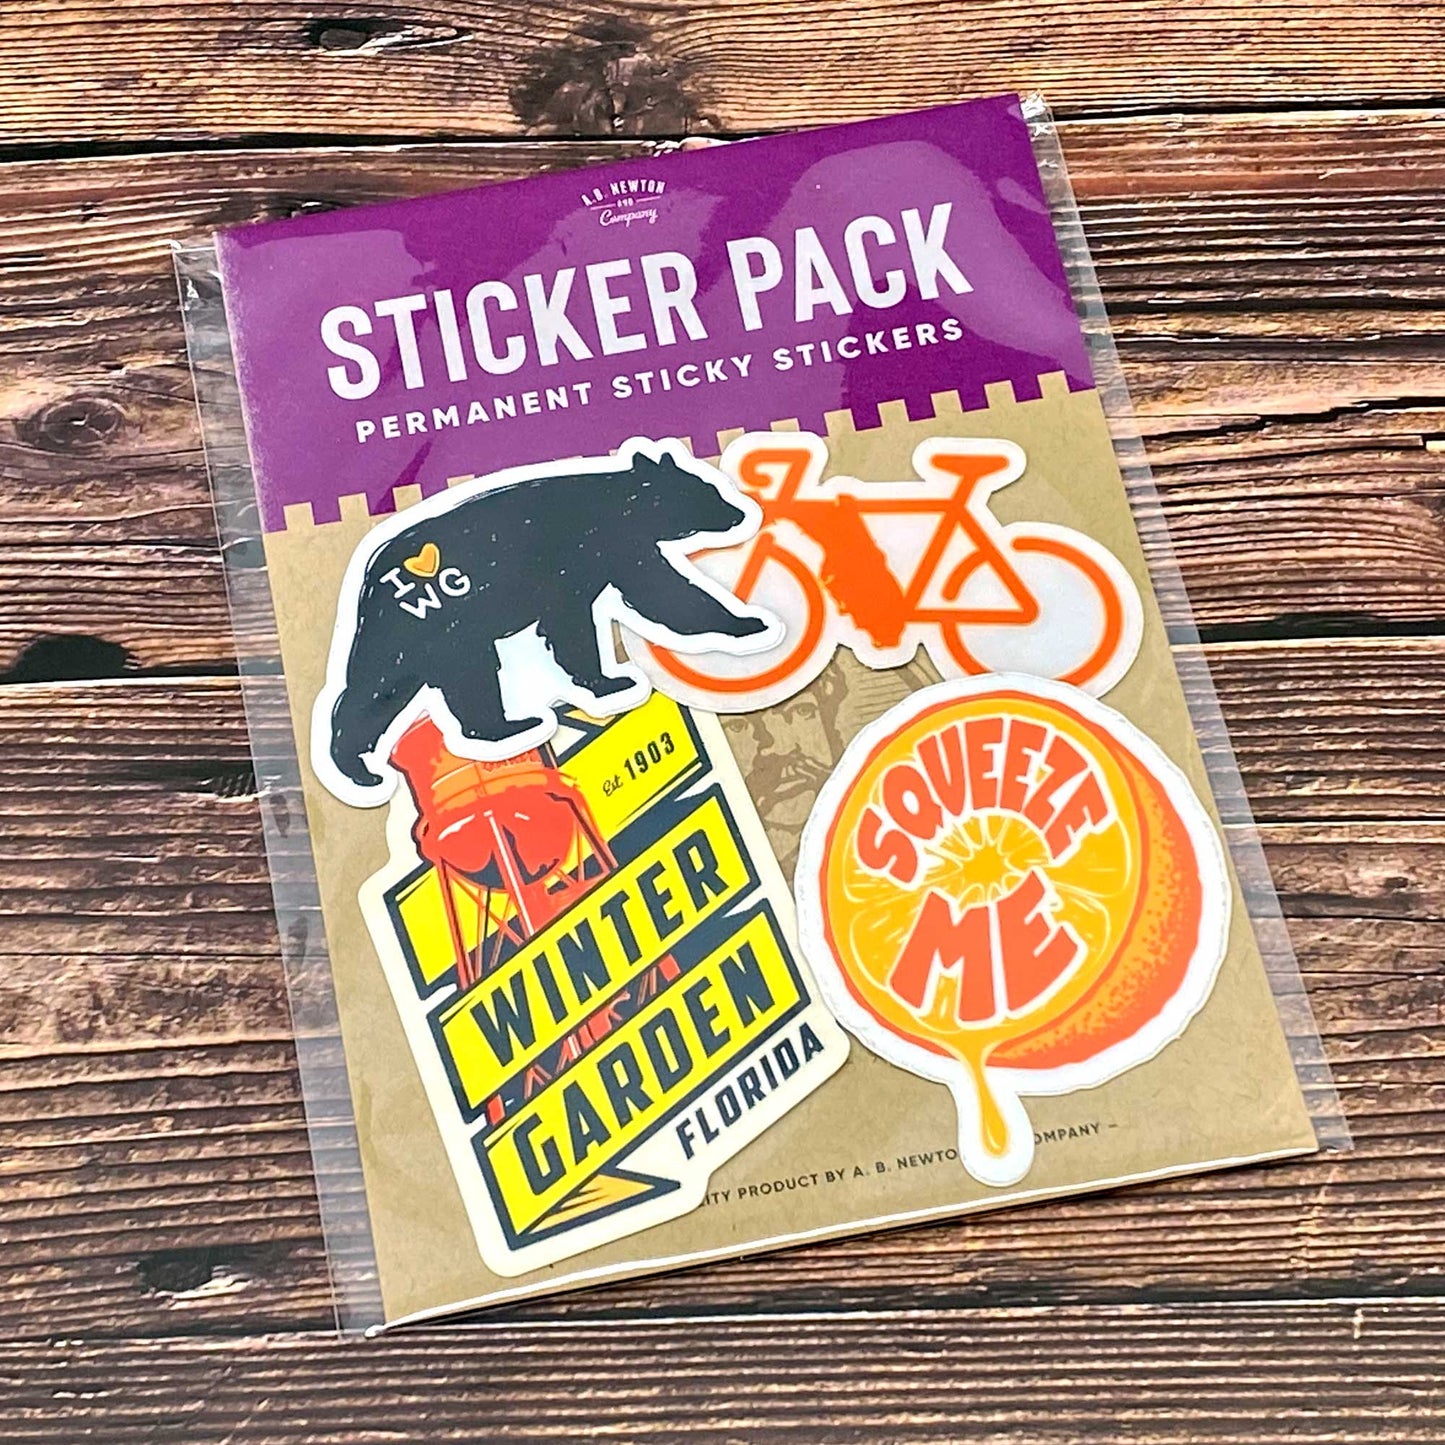 Florida Sticker Pack